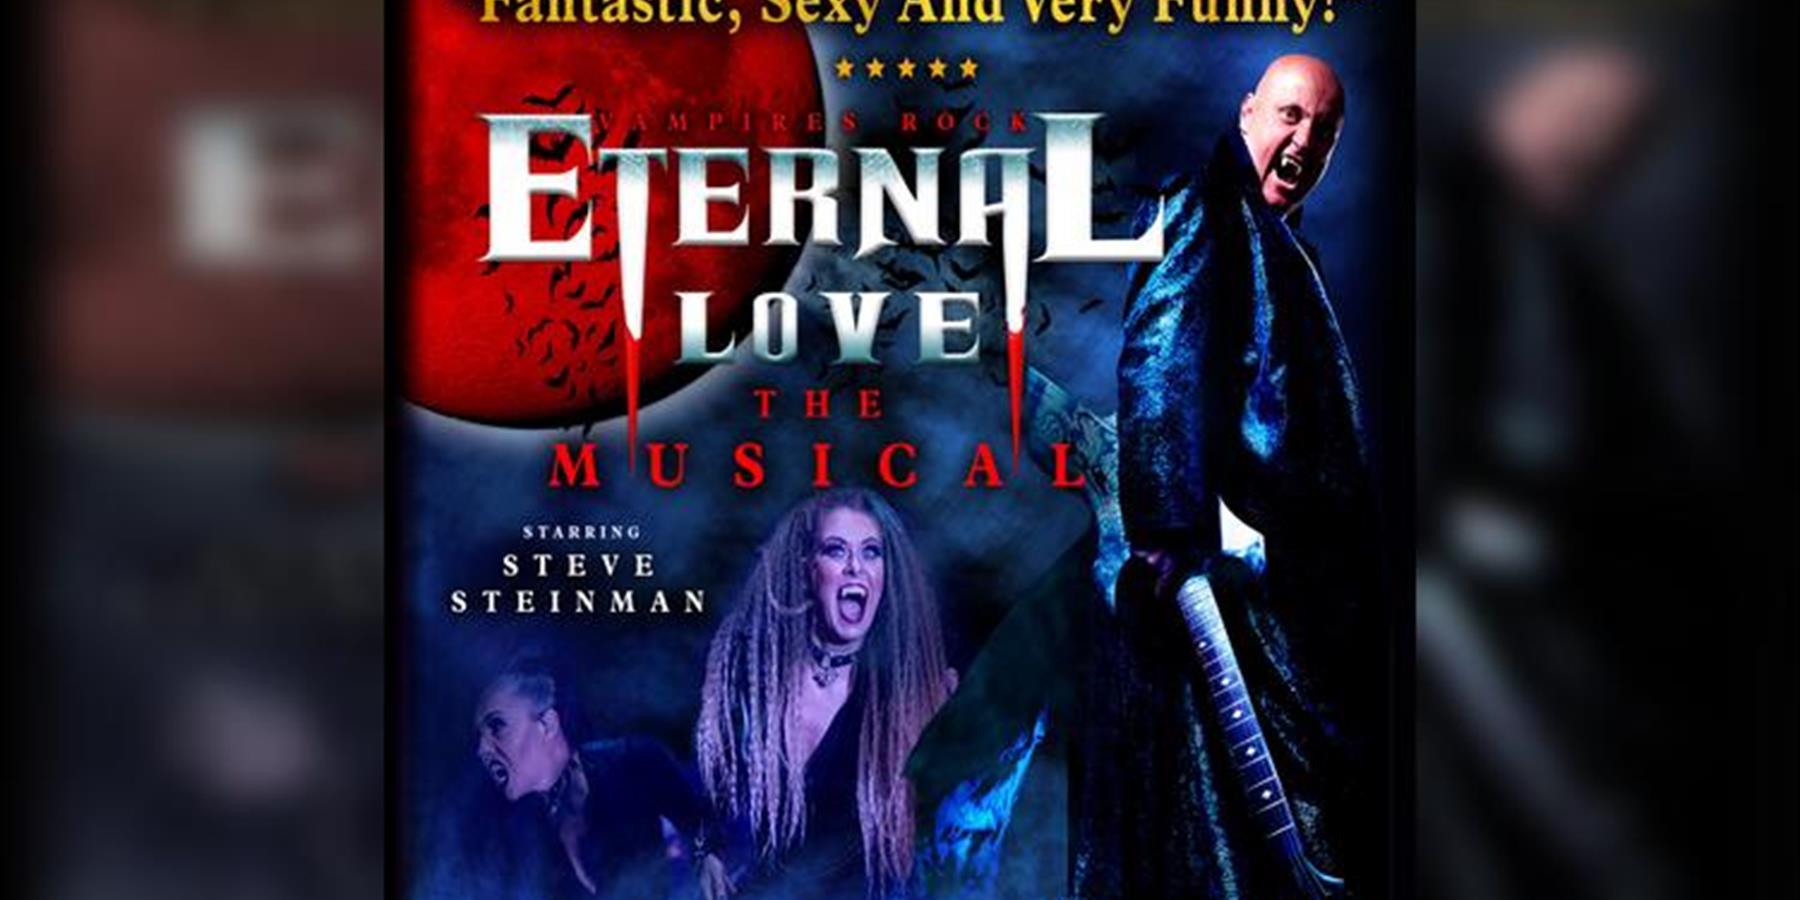 Steve Steinman’s Eternal Love: The Musical